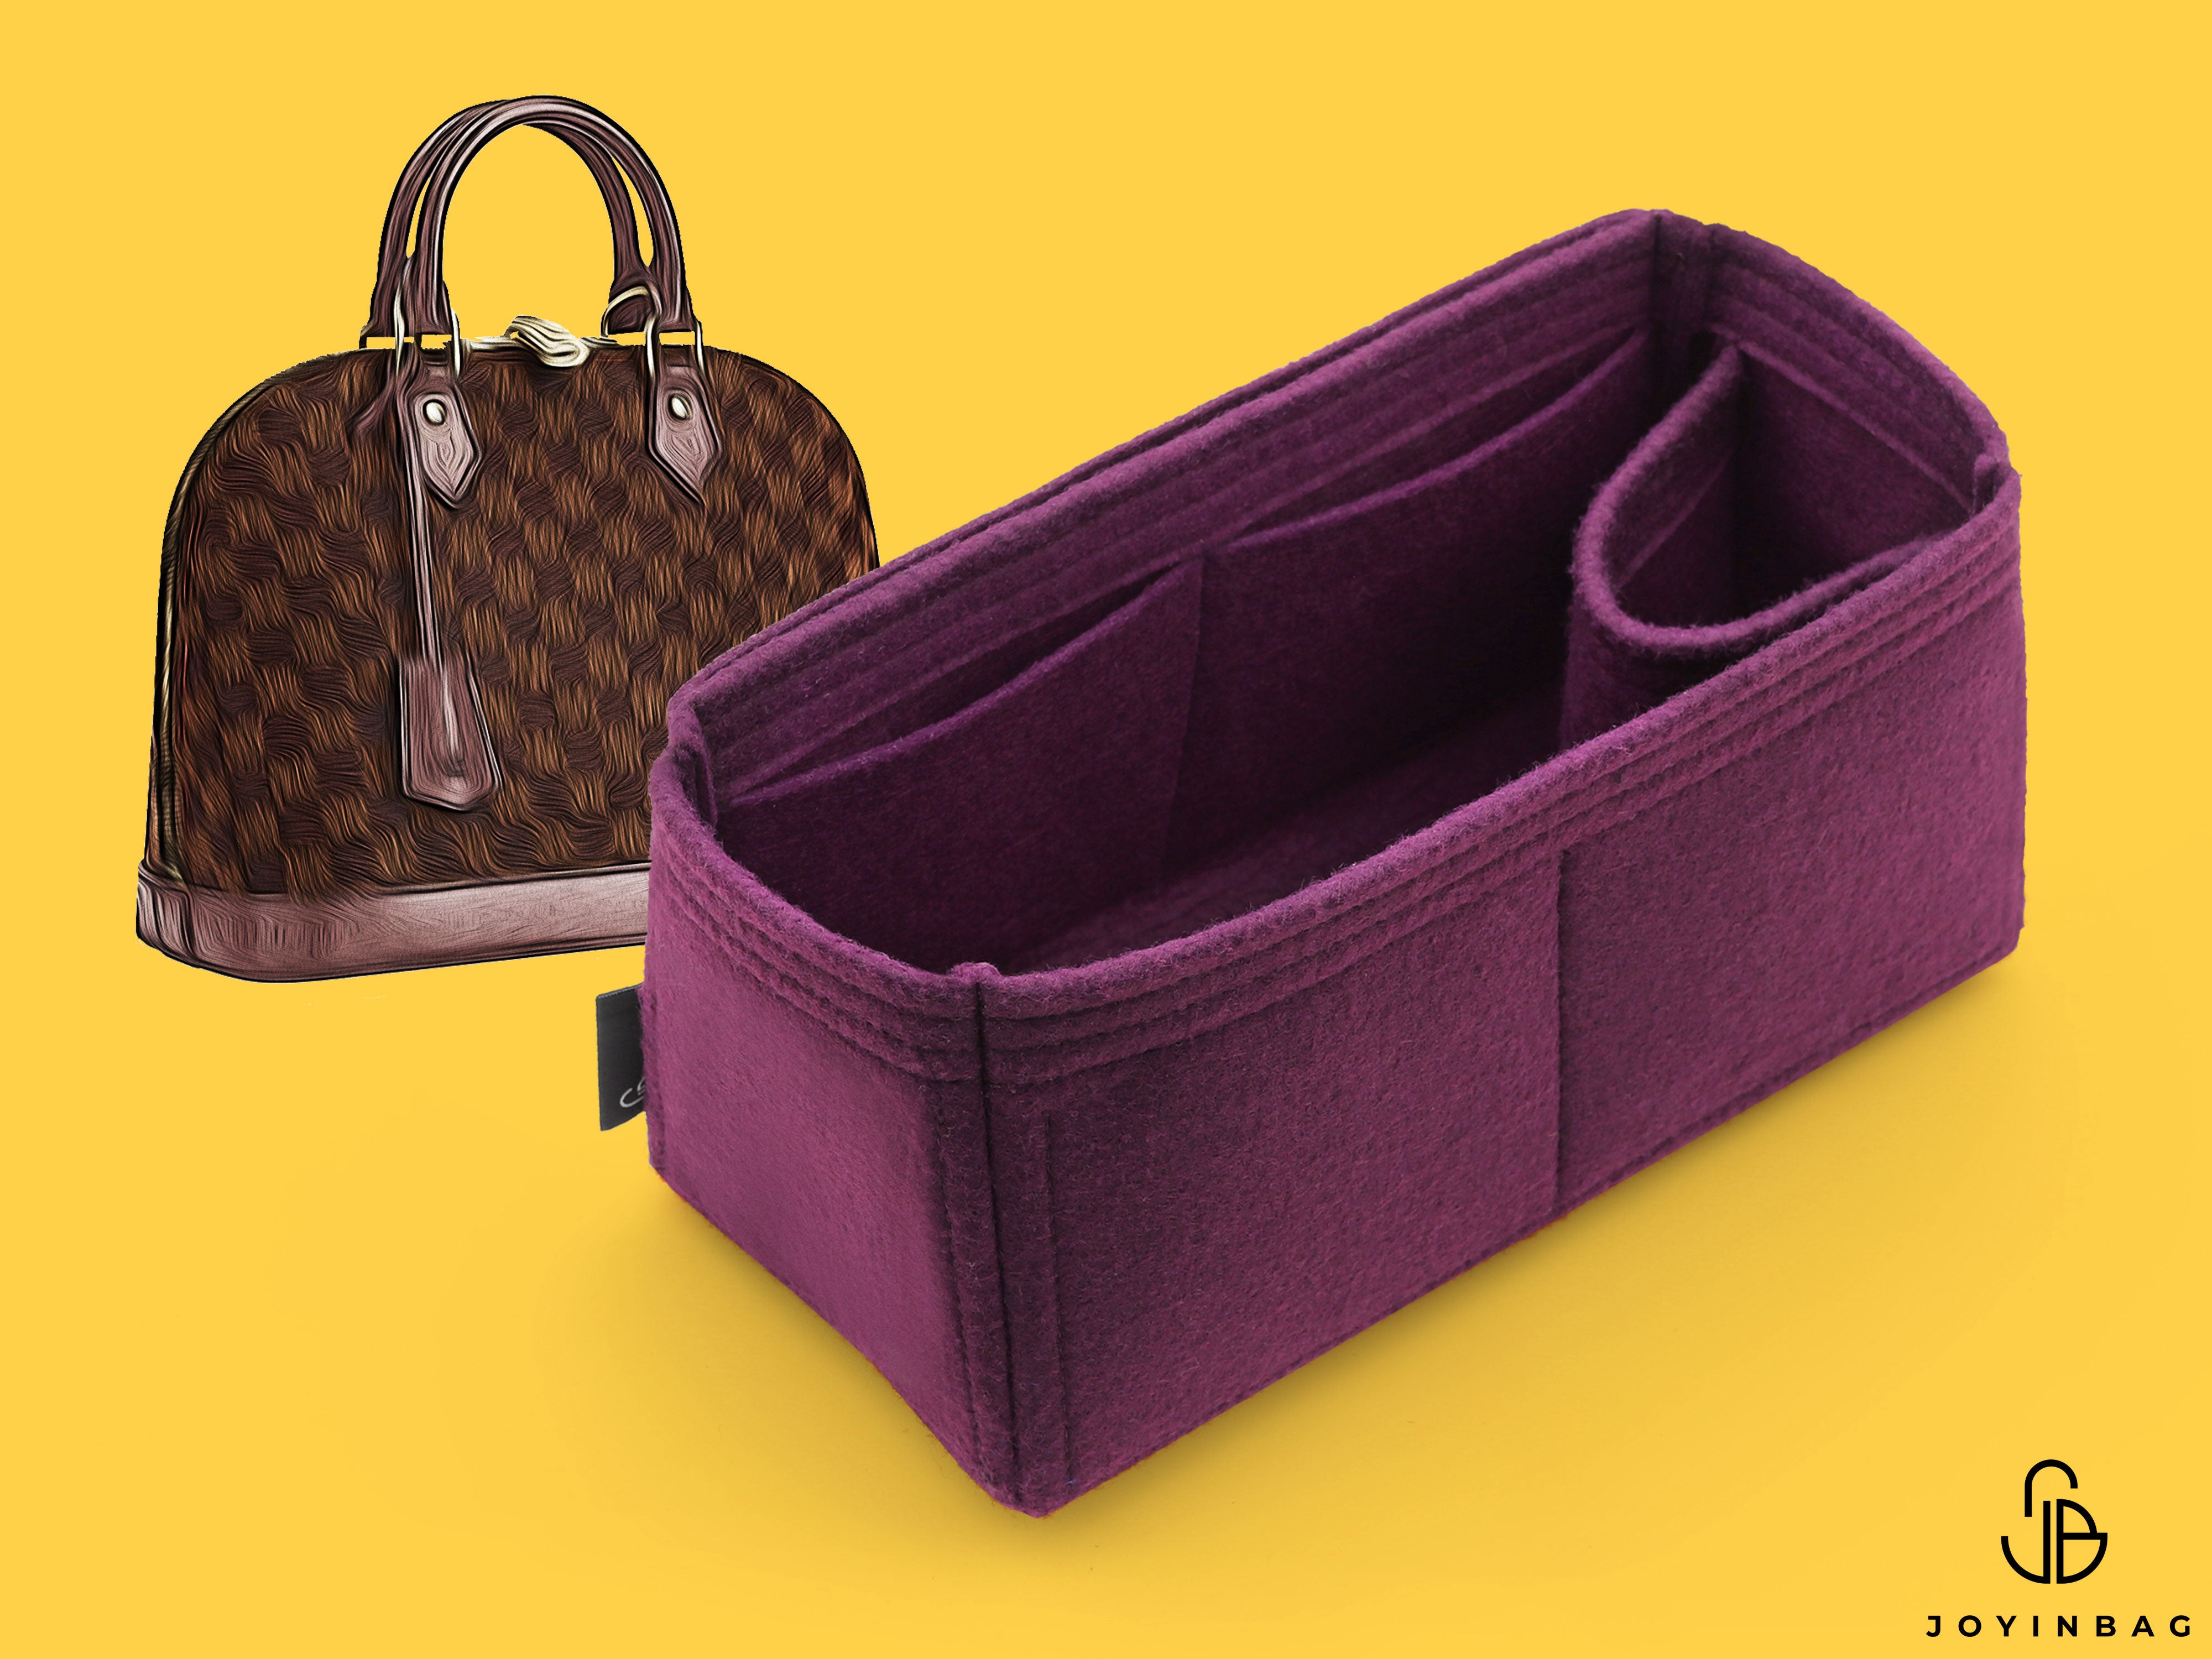 Buy Bag Organizer for Louis Vuitton Monogram Alma PM Handbag